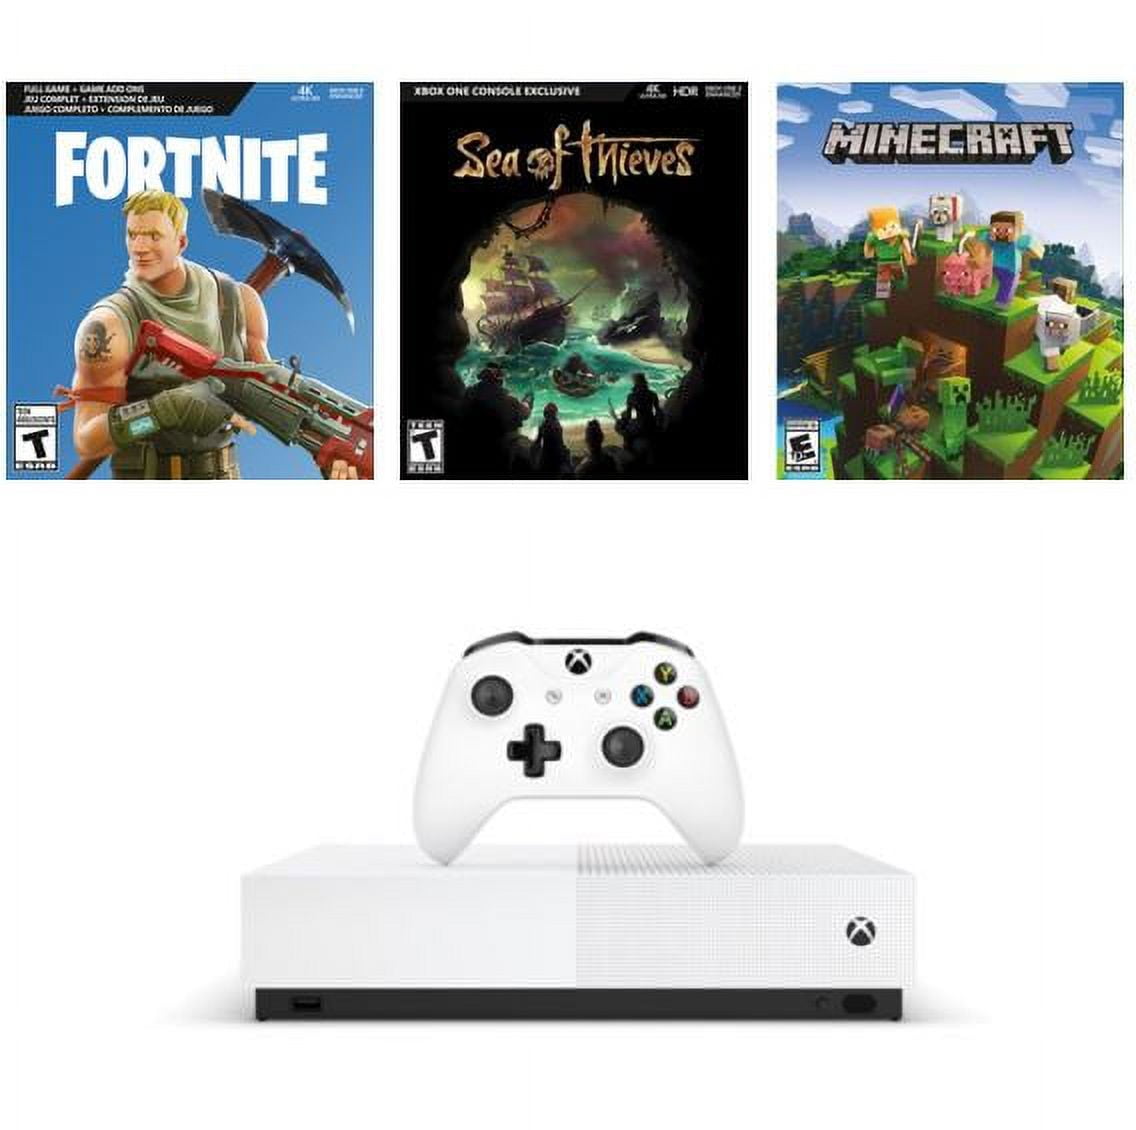 Microsoft Xbox One S 1TB Fortnite Bundle with 4K Ultra HD Blu-ray White  234-00703 - Best Buy